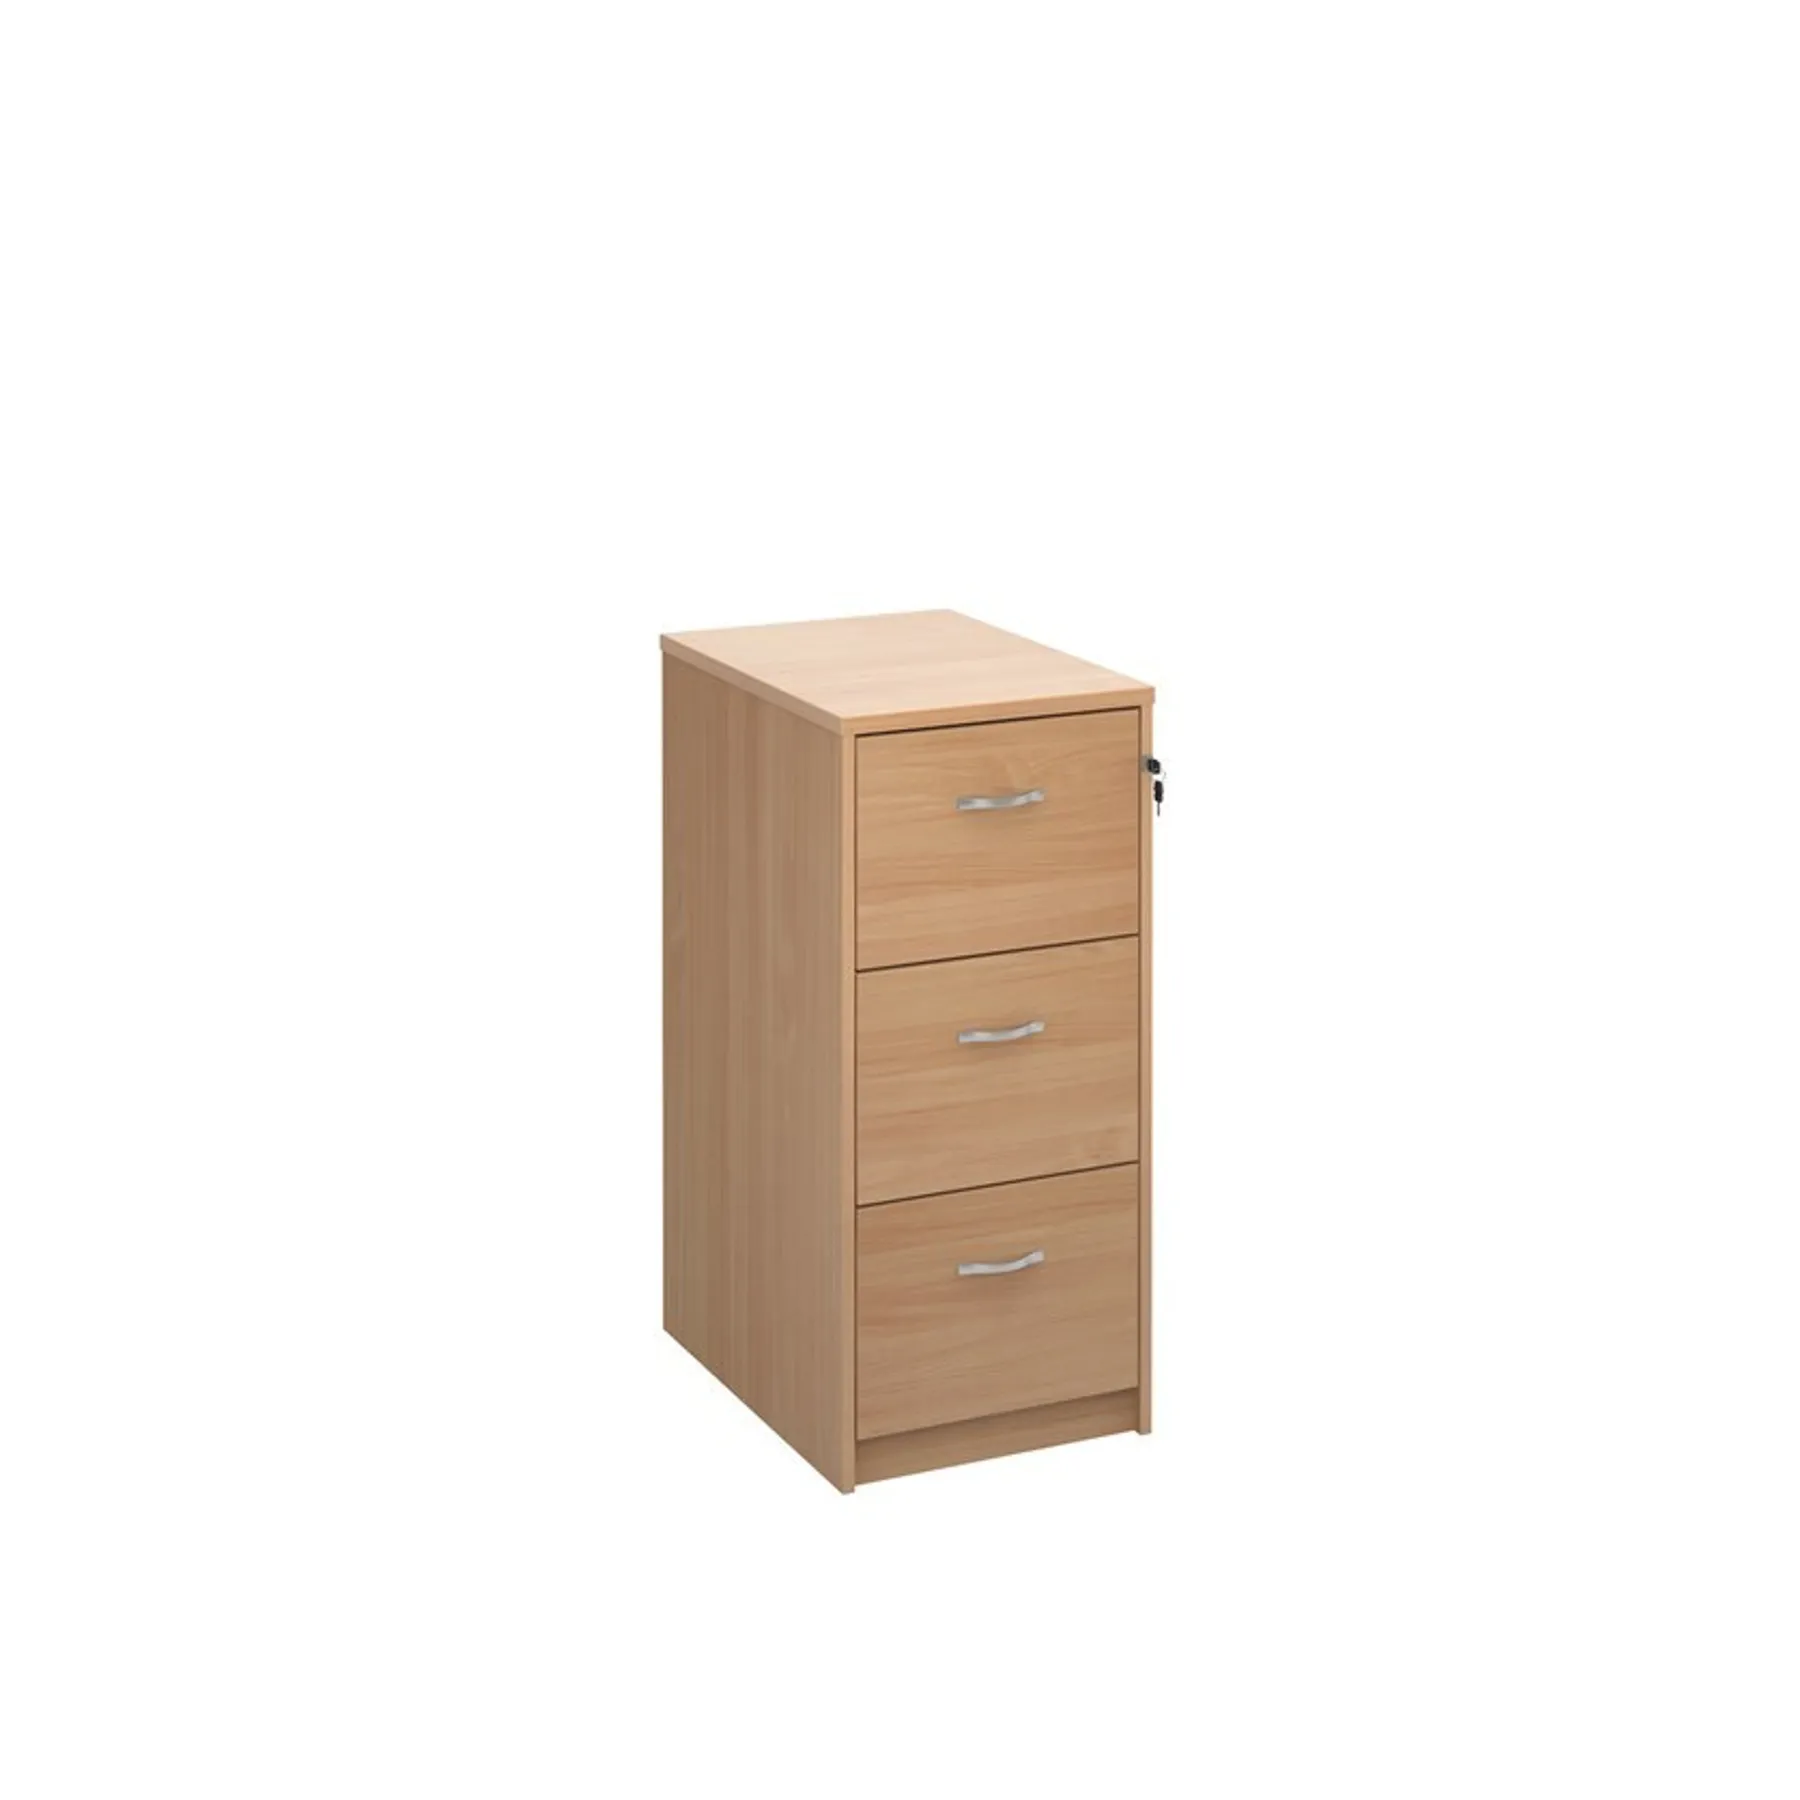 LF3 oak 3 drawer filing cabinet